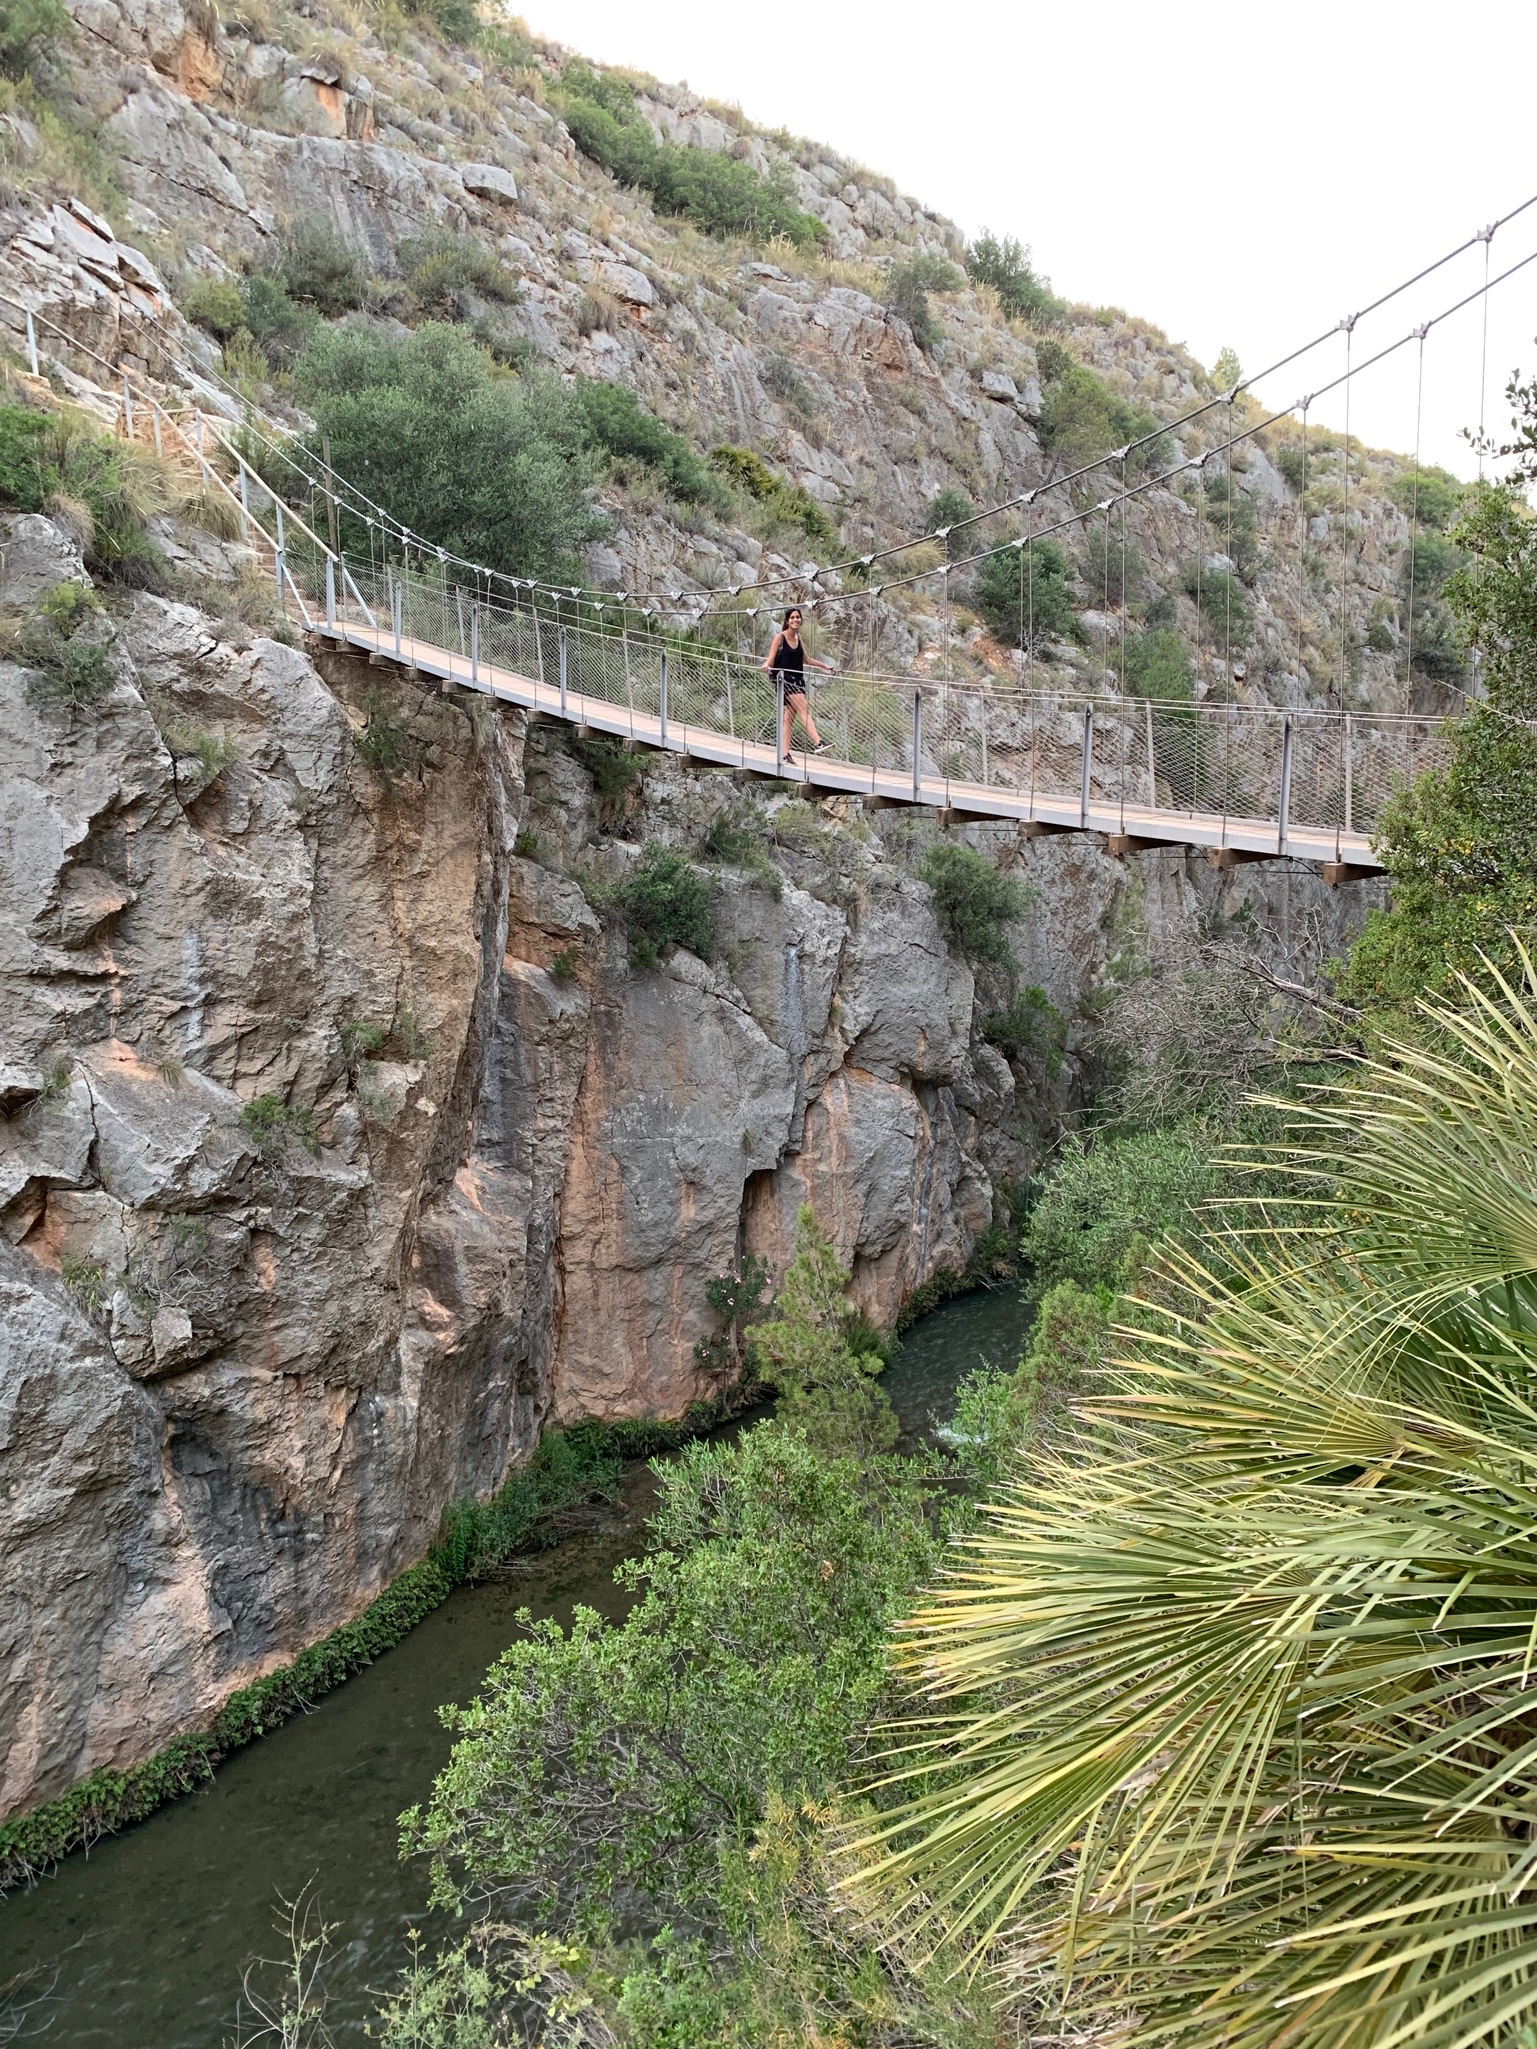 A gran escala Madurar Refrescante Ruta de los puentes colgantes (Chulilla, Valencia) - serraniaaventura.com